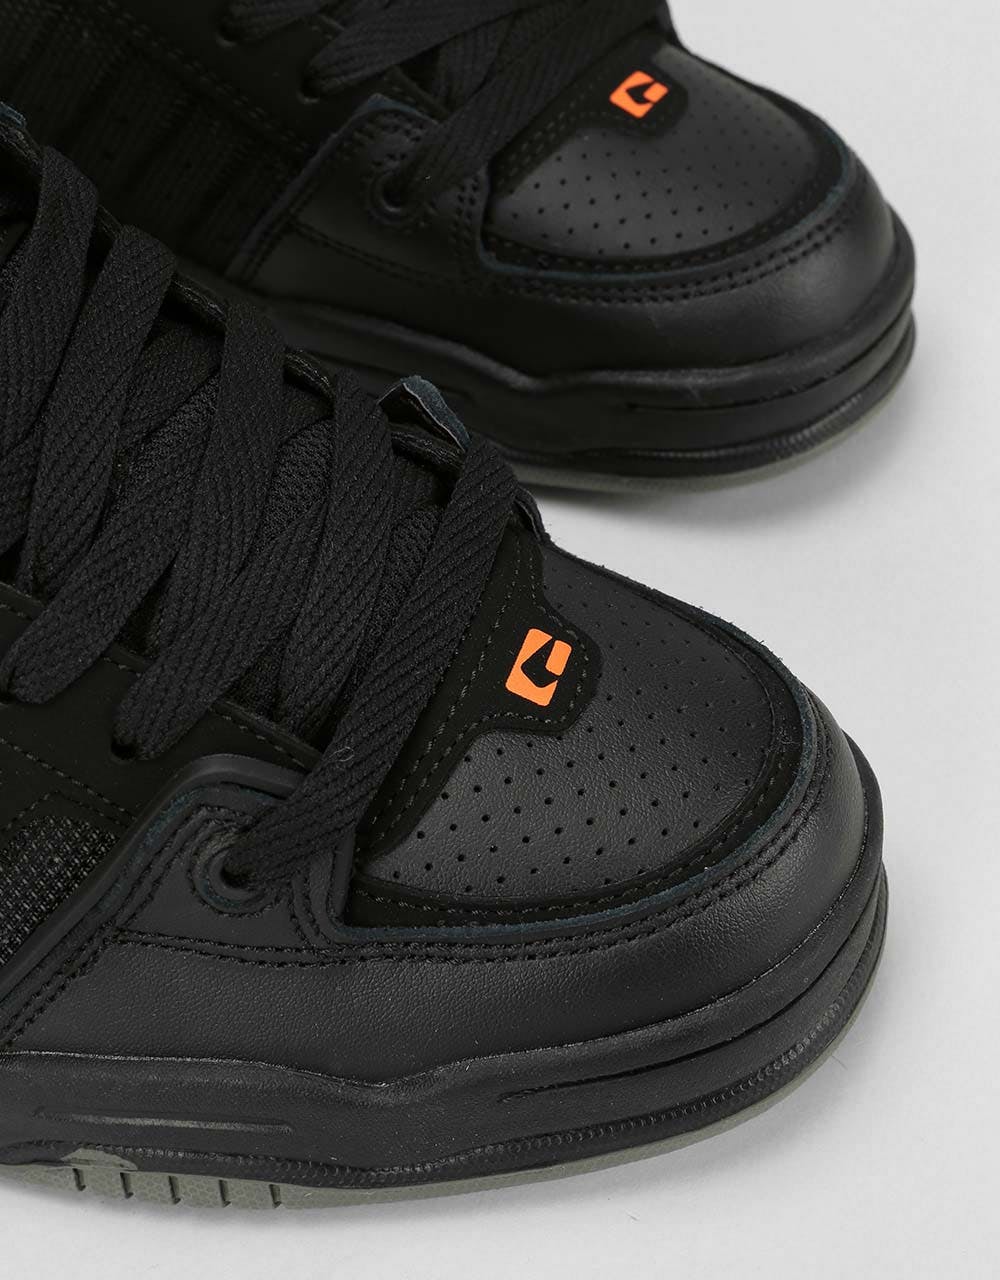 Globe Fusion Skate Shoes - Black/Black/Orange